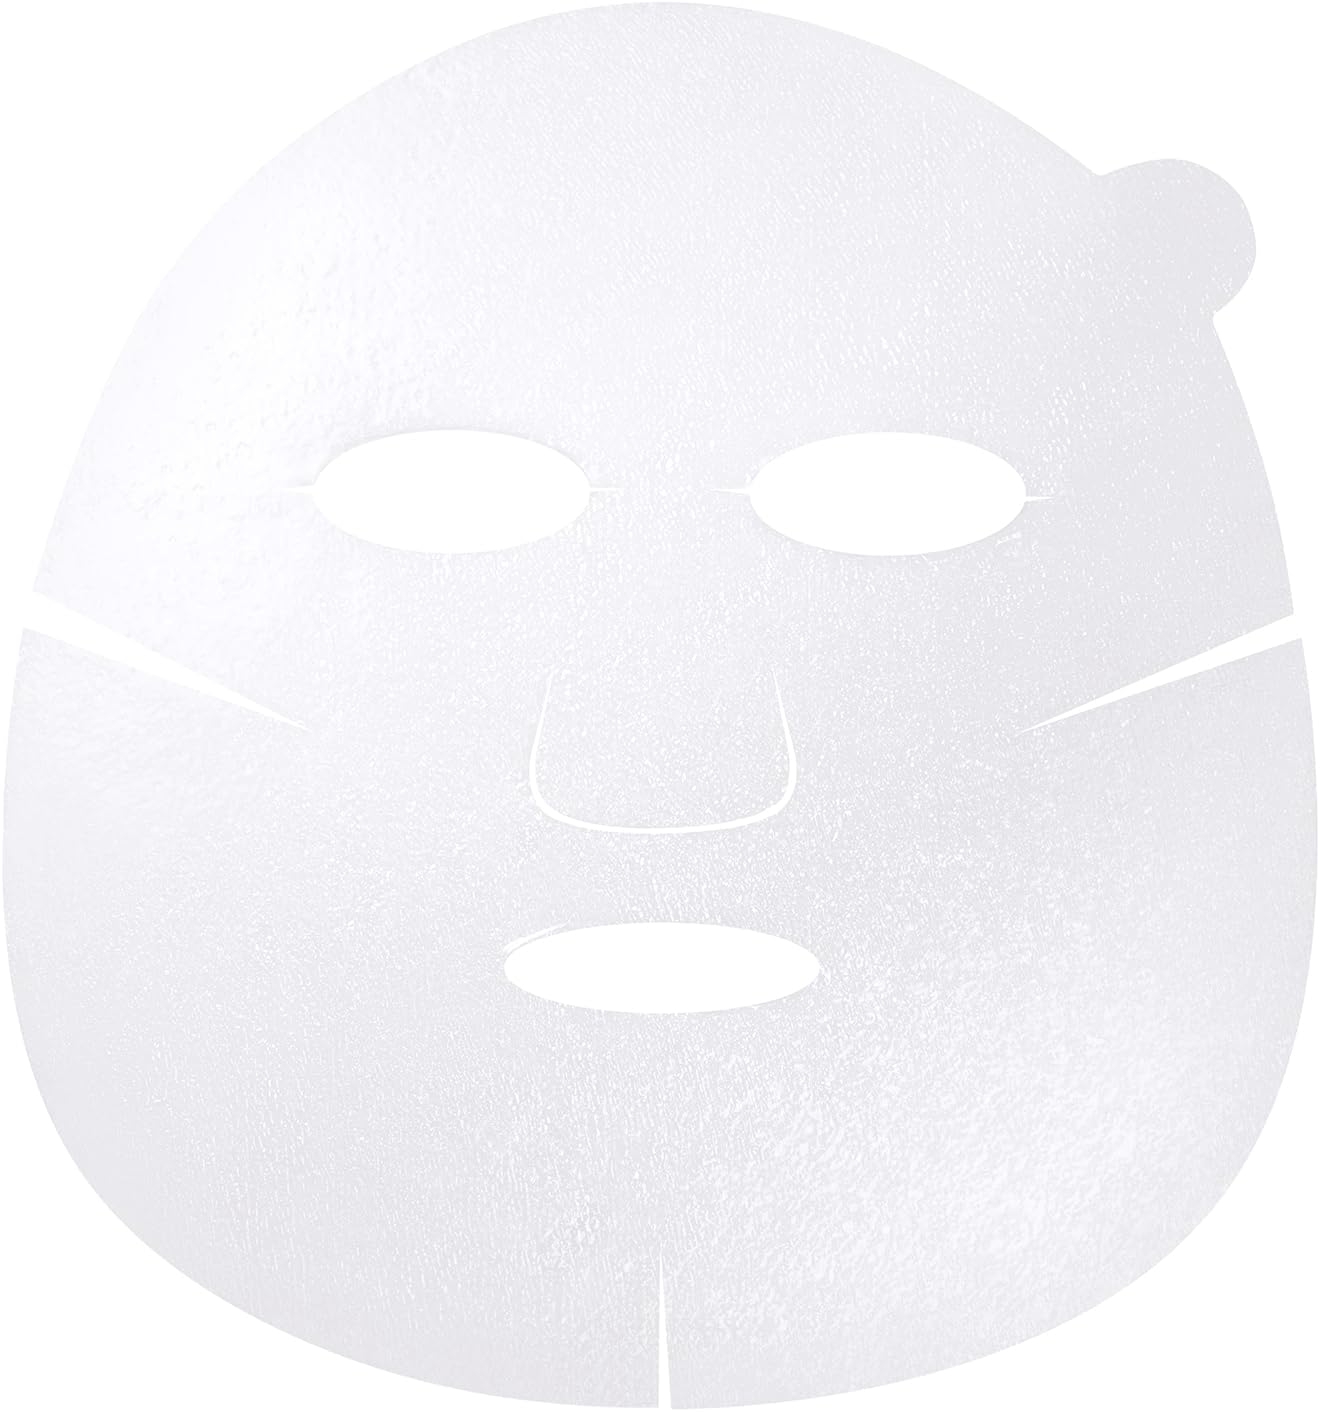 ONE BY KOSÉ(ワンバイコーセー) メラノショット W マスクの商品画像8 